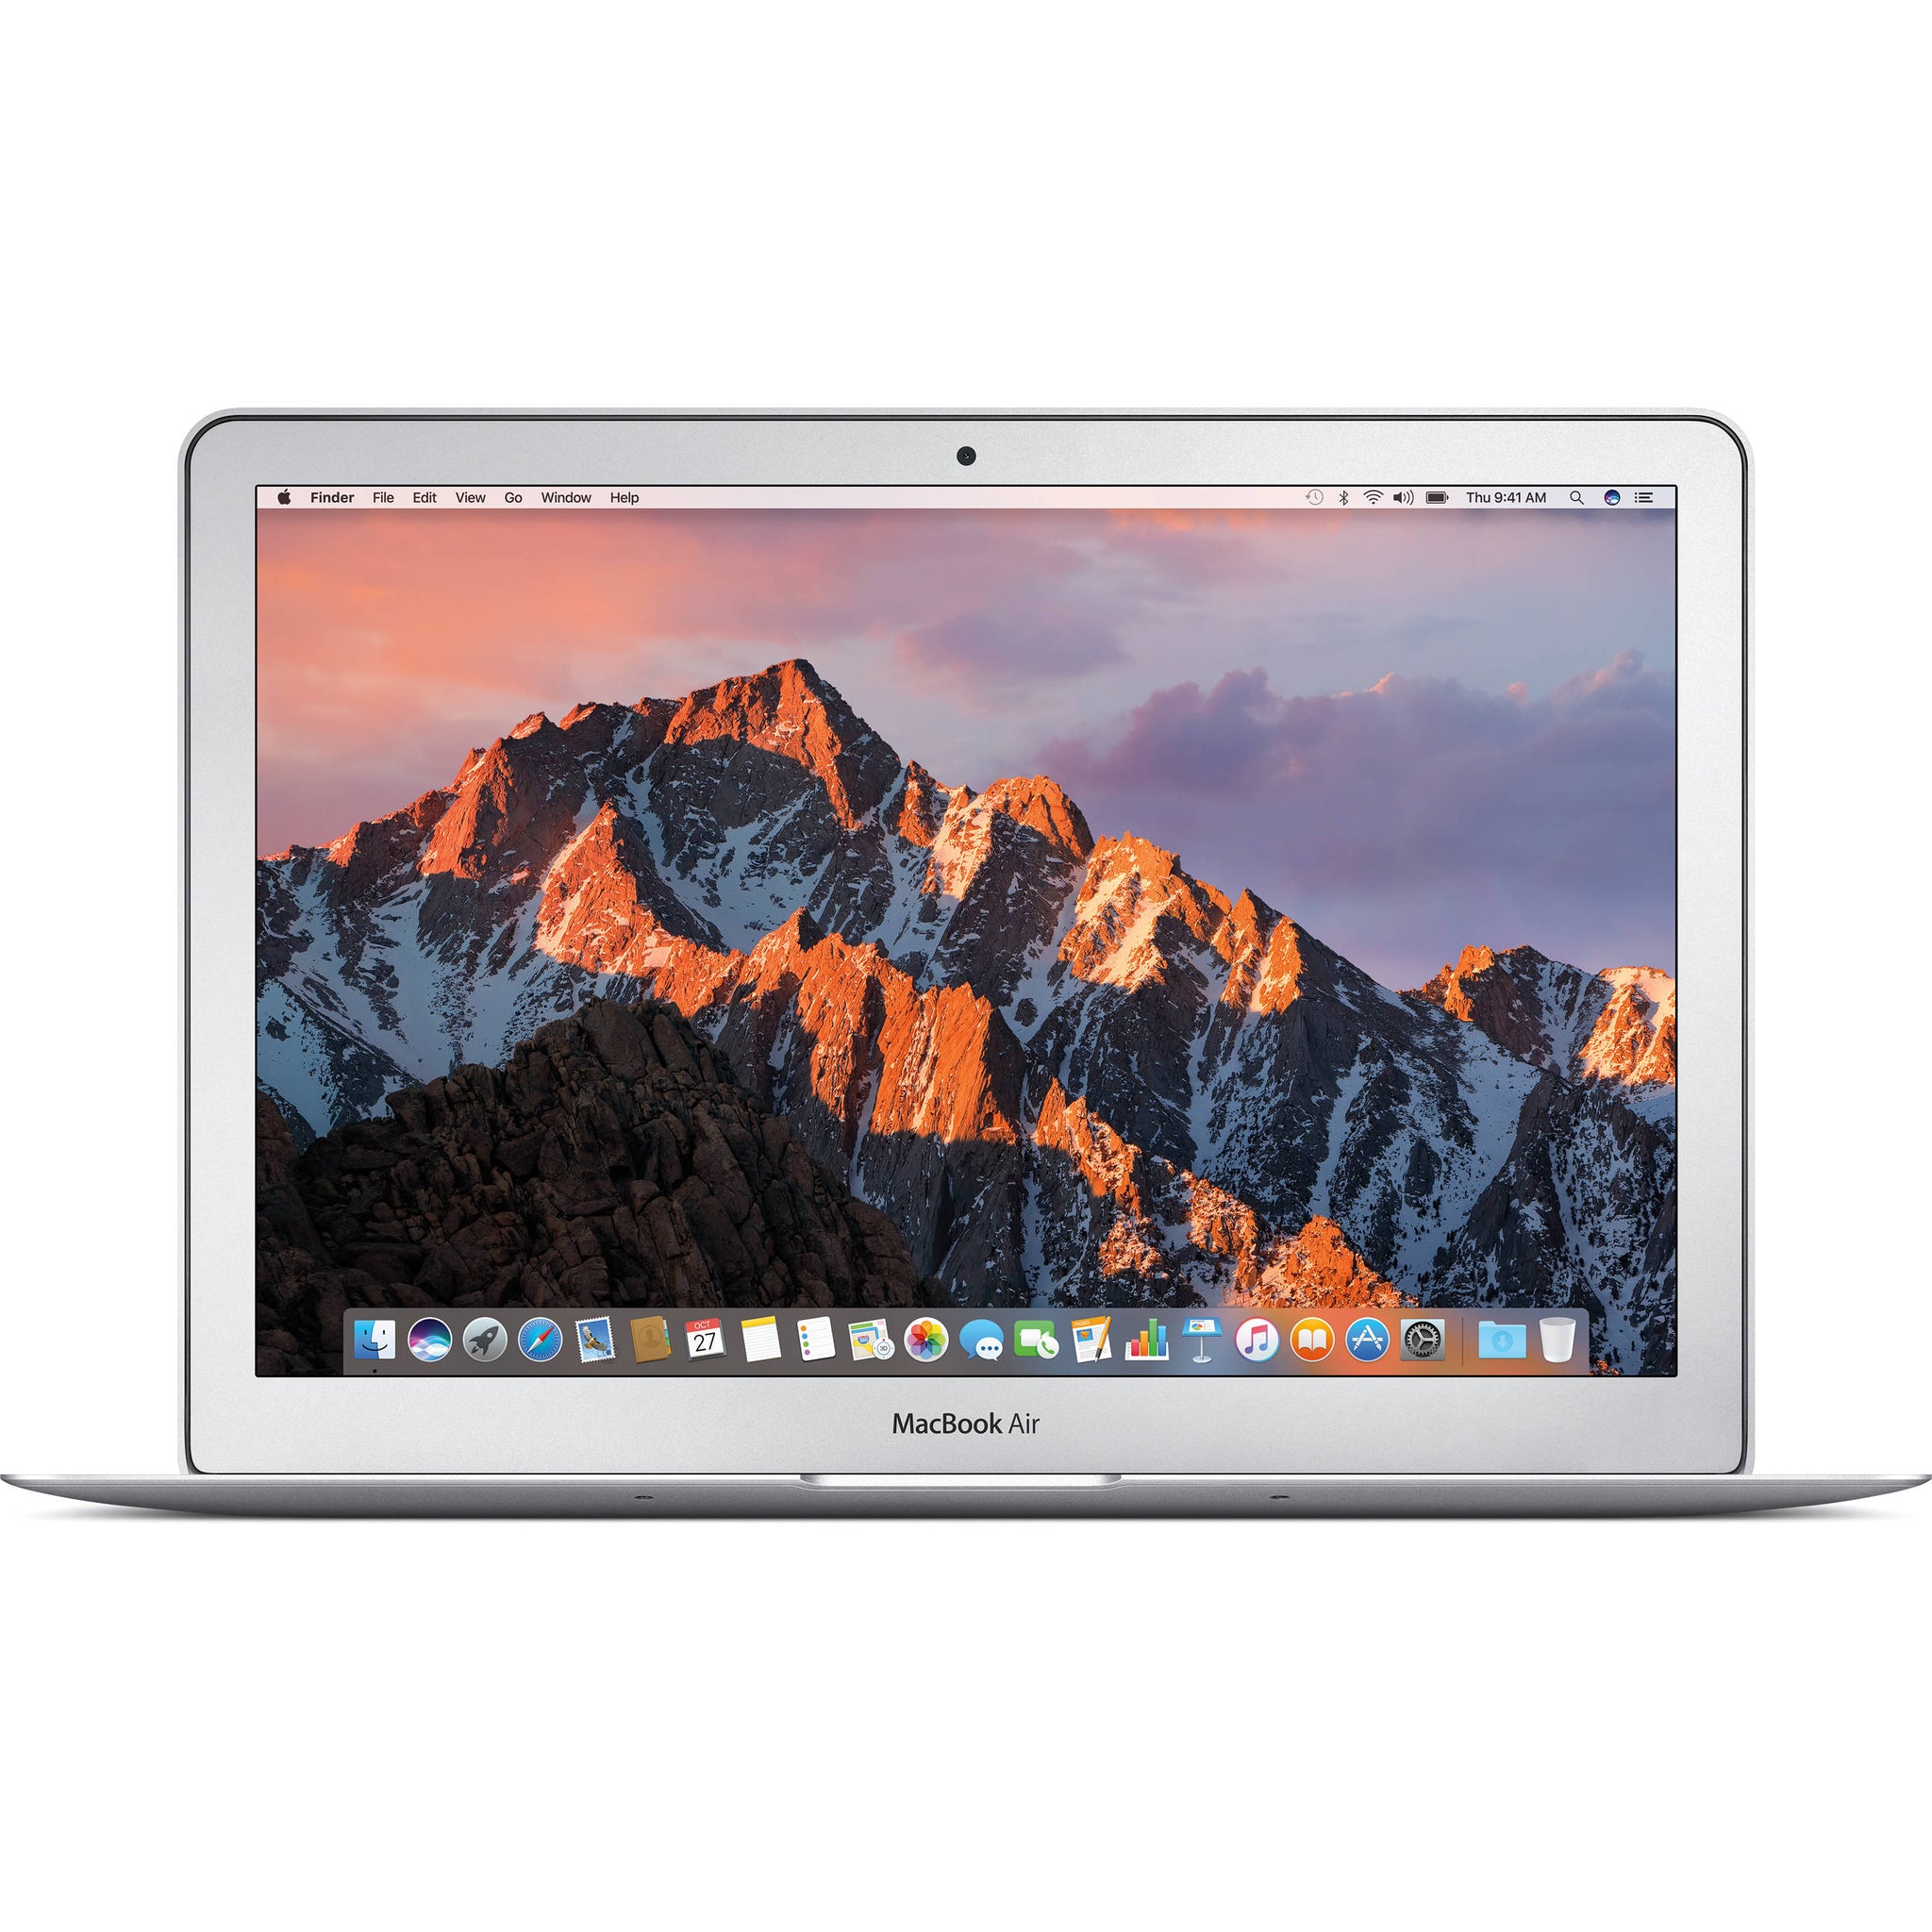 MacBook Pro Apple neuf, utilisé 2 semaines, à vendre à Djibouti